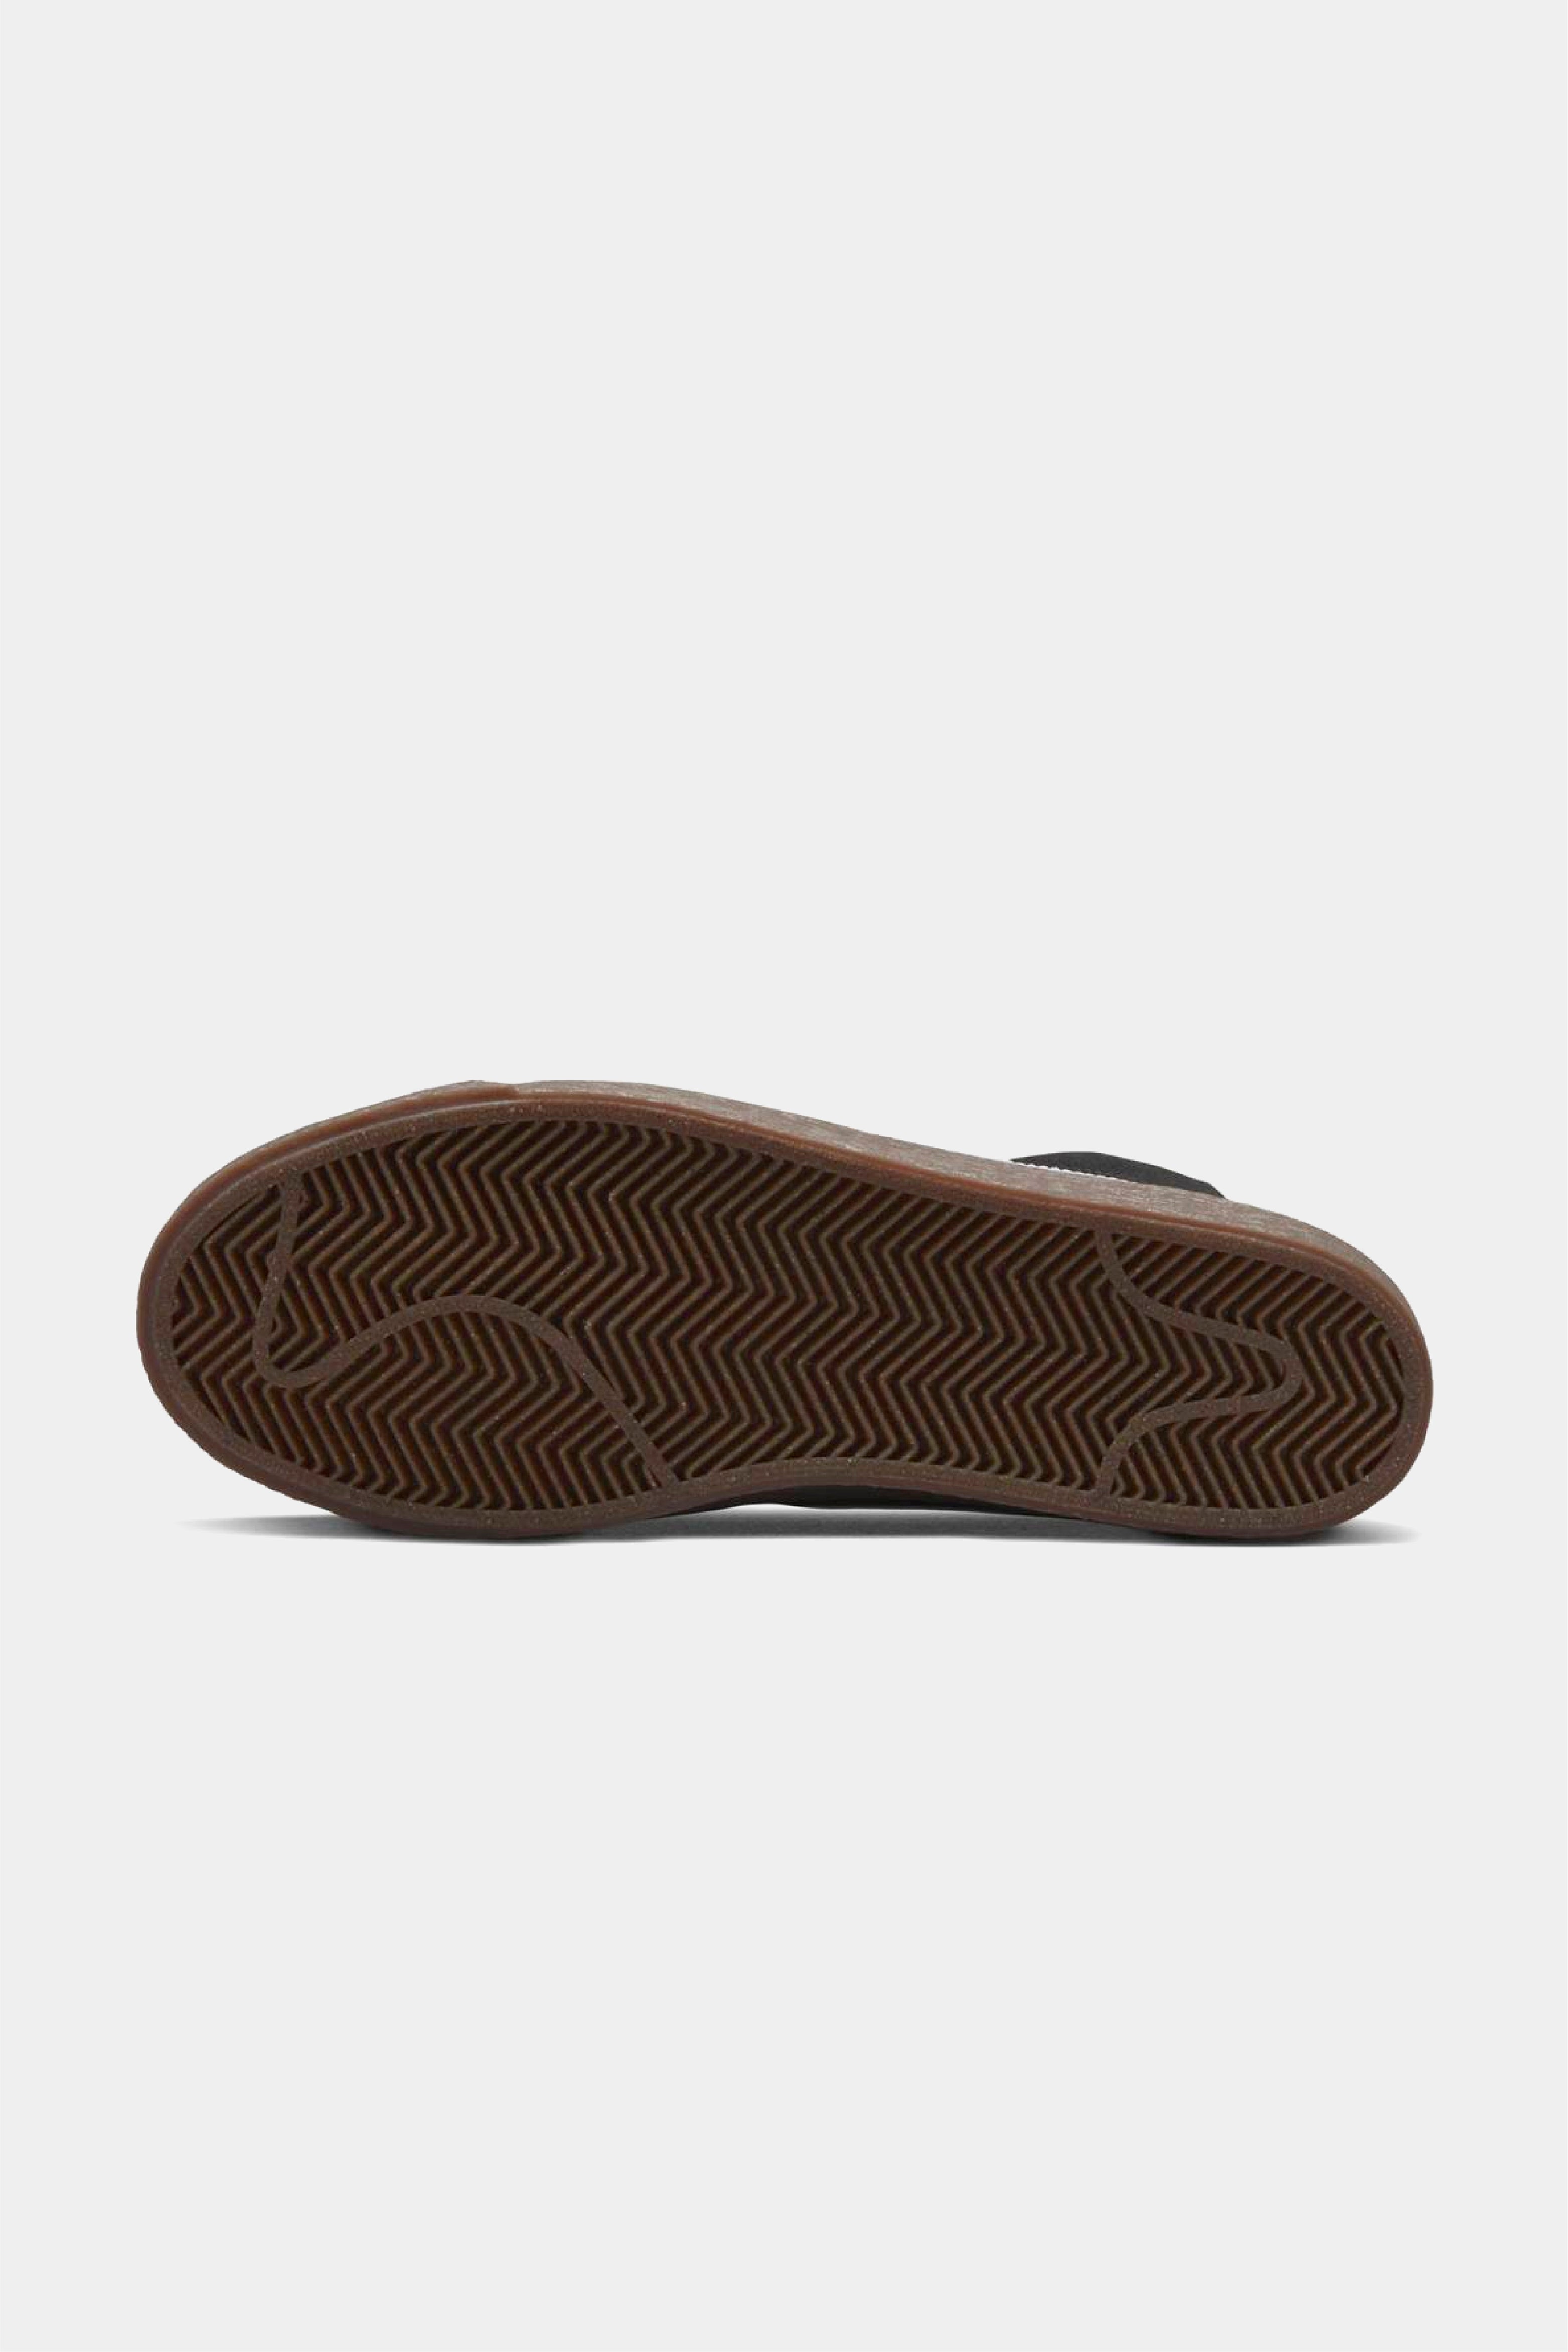 Selectshop FRAME - NIKE SB Nike SB Zoom Blazer Mid Footwear Dubai